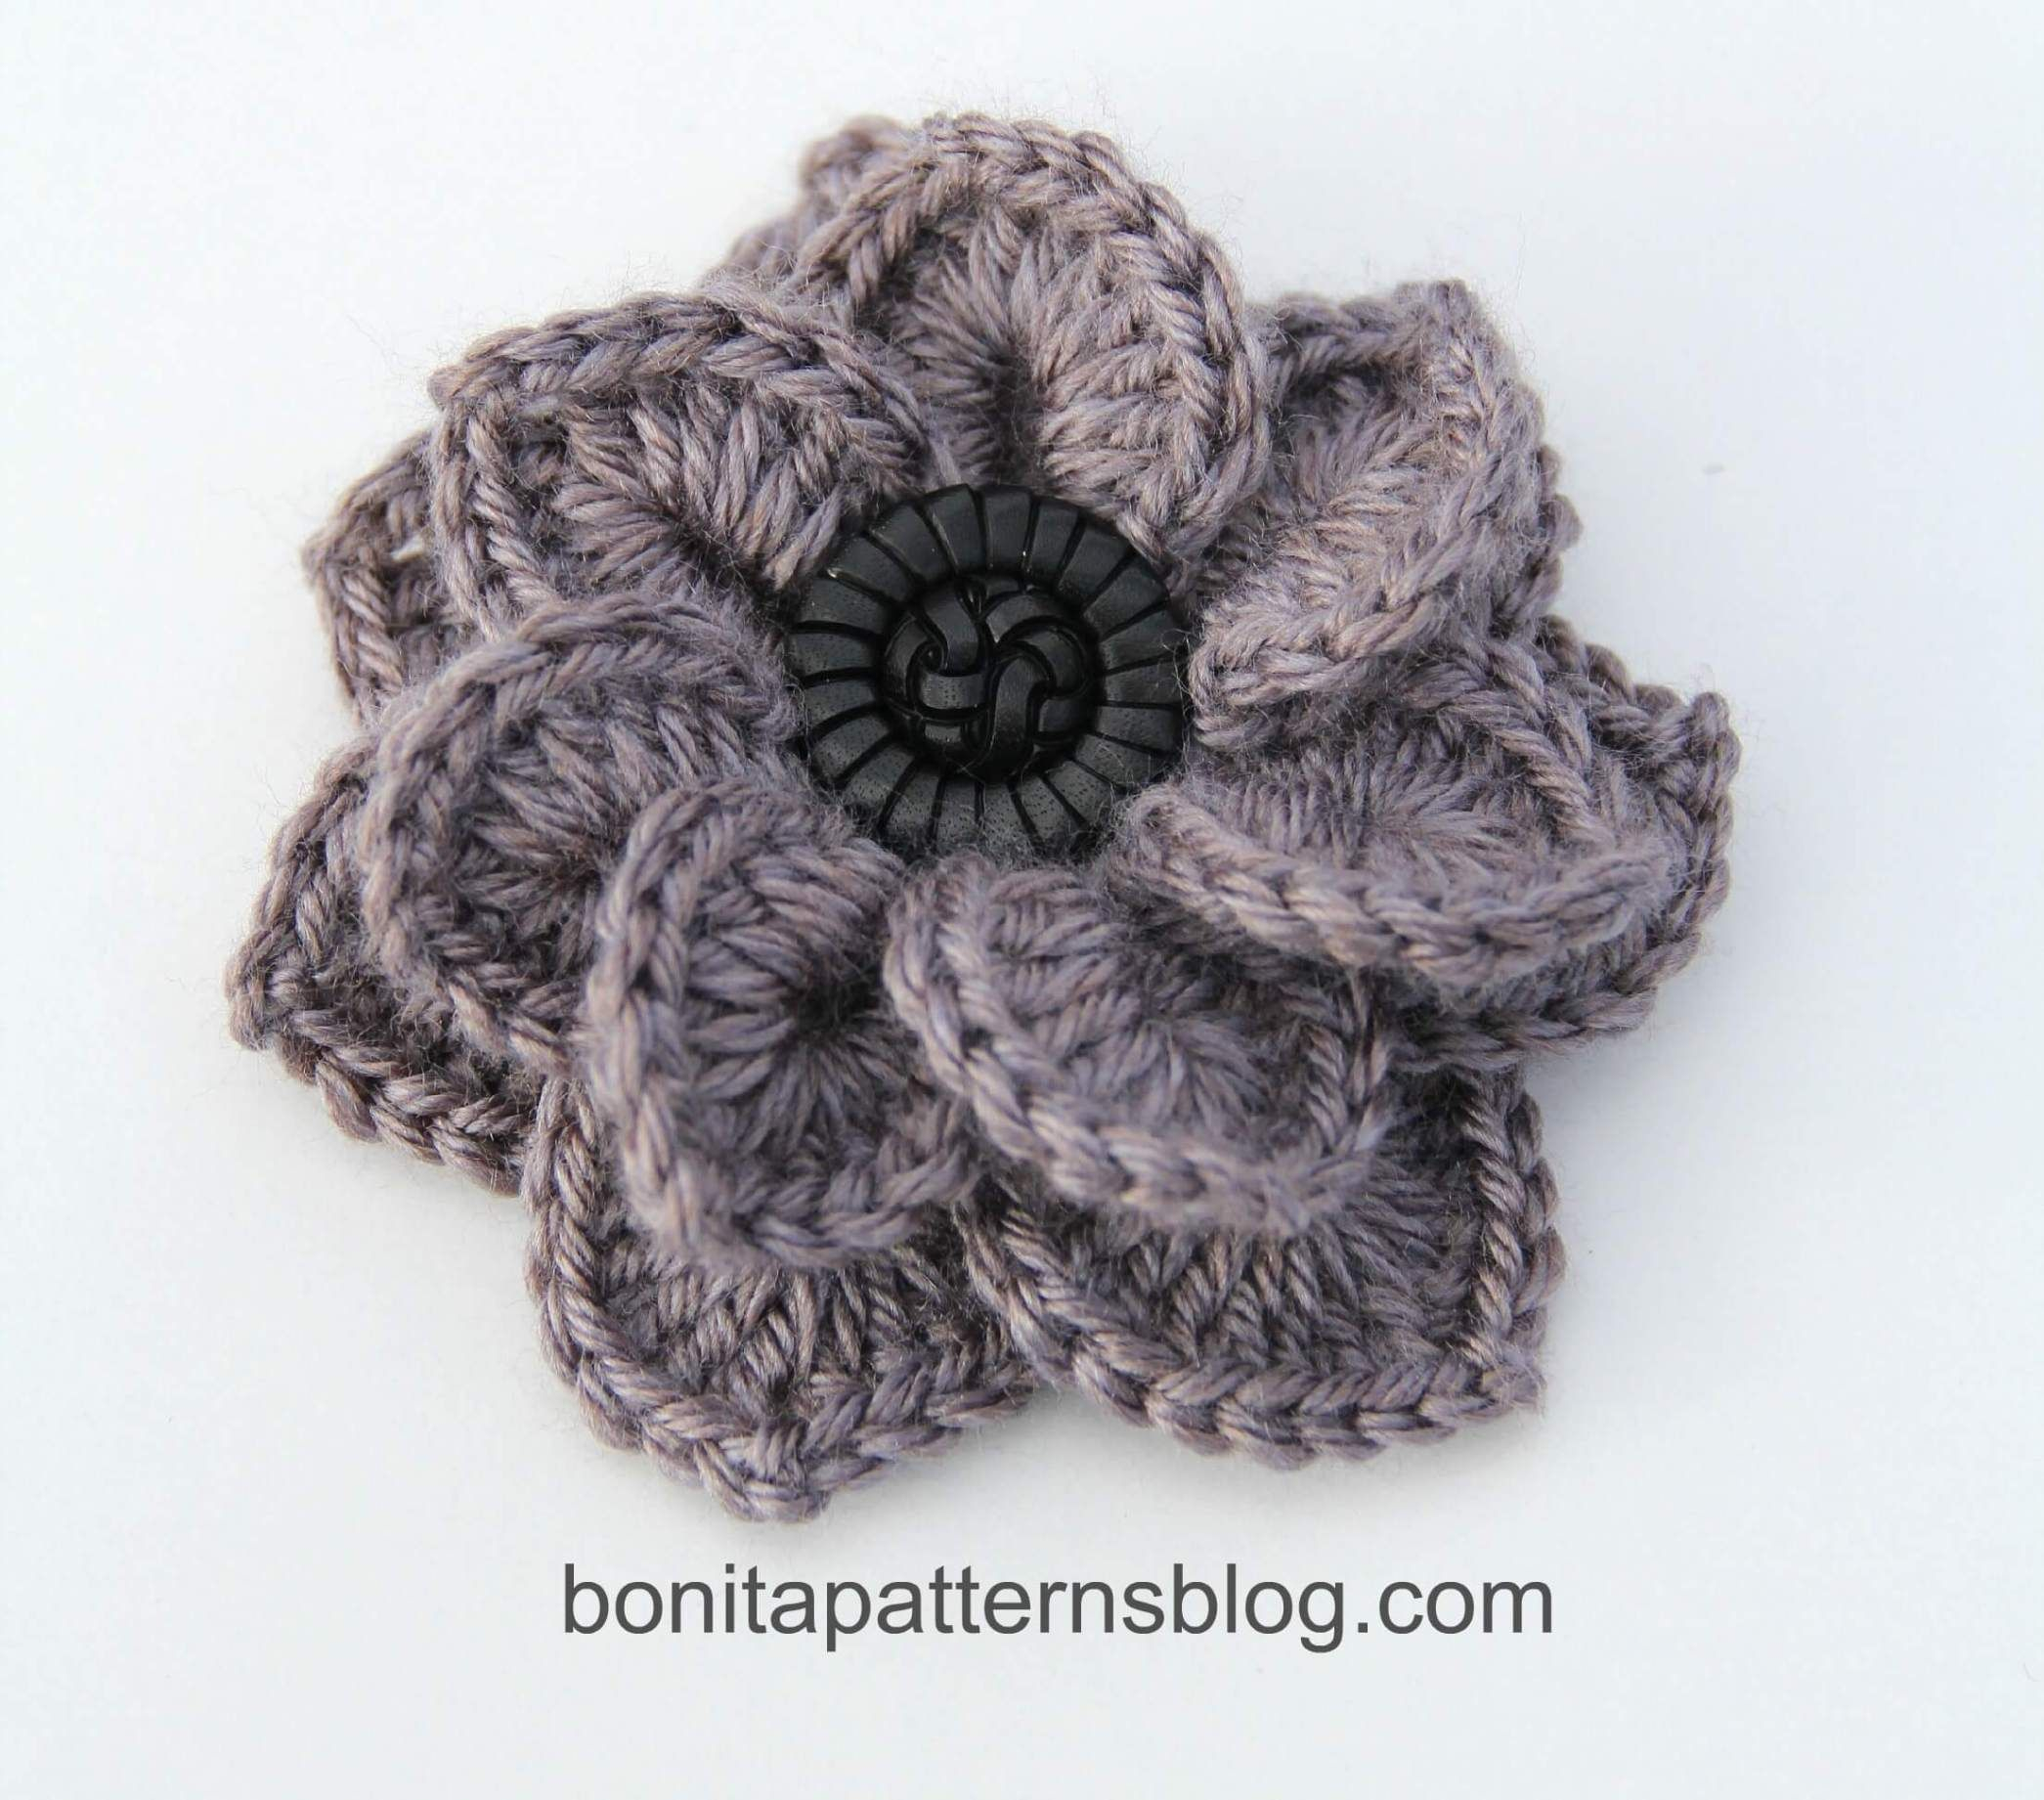 Crochet Sunflower Pattern My Top 10 Favorite Free Patterns For Crochet Flowers Appliques